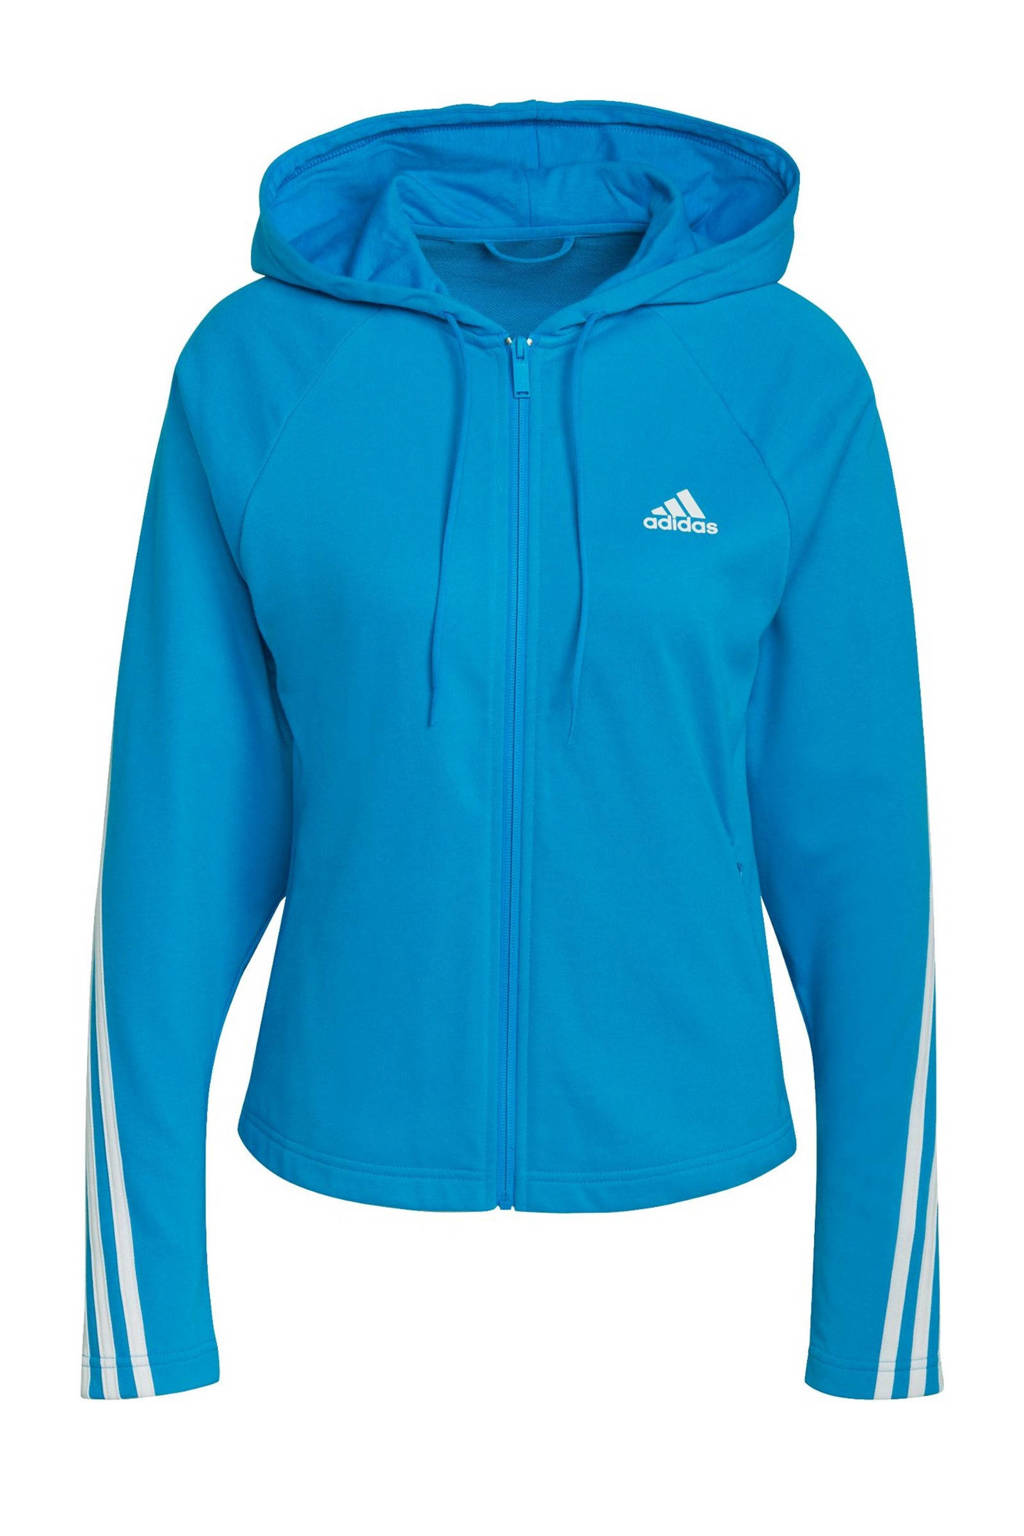 adidas Performance fleece joggingpak blauw/wit